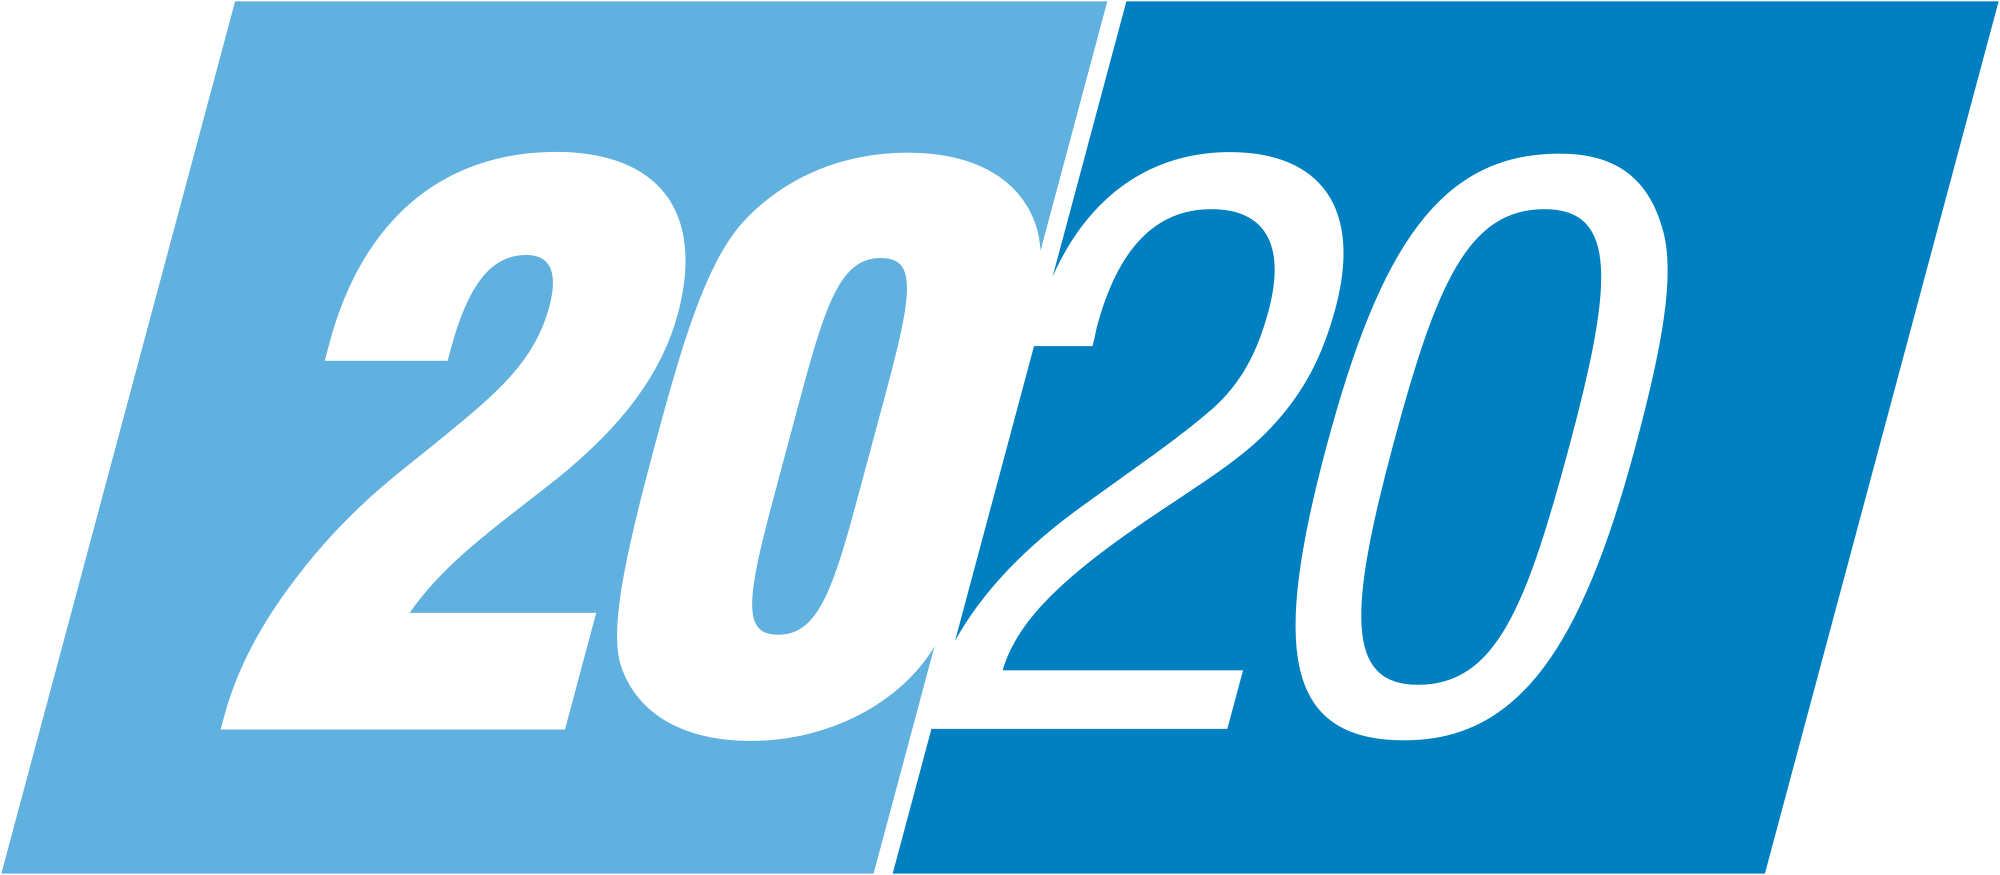 Year 2020 PNG Photos